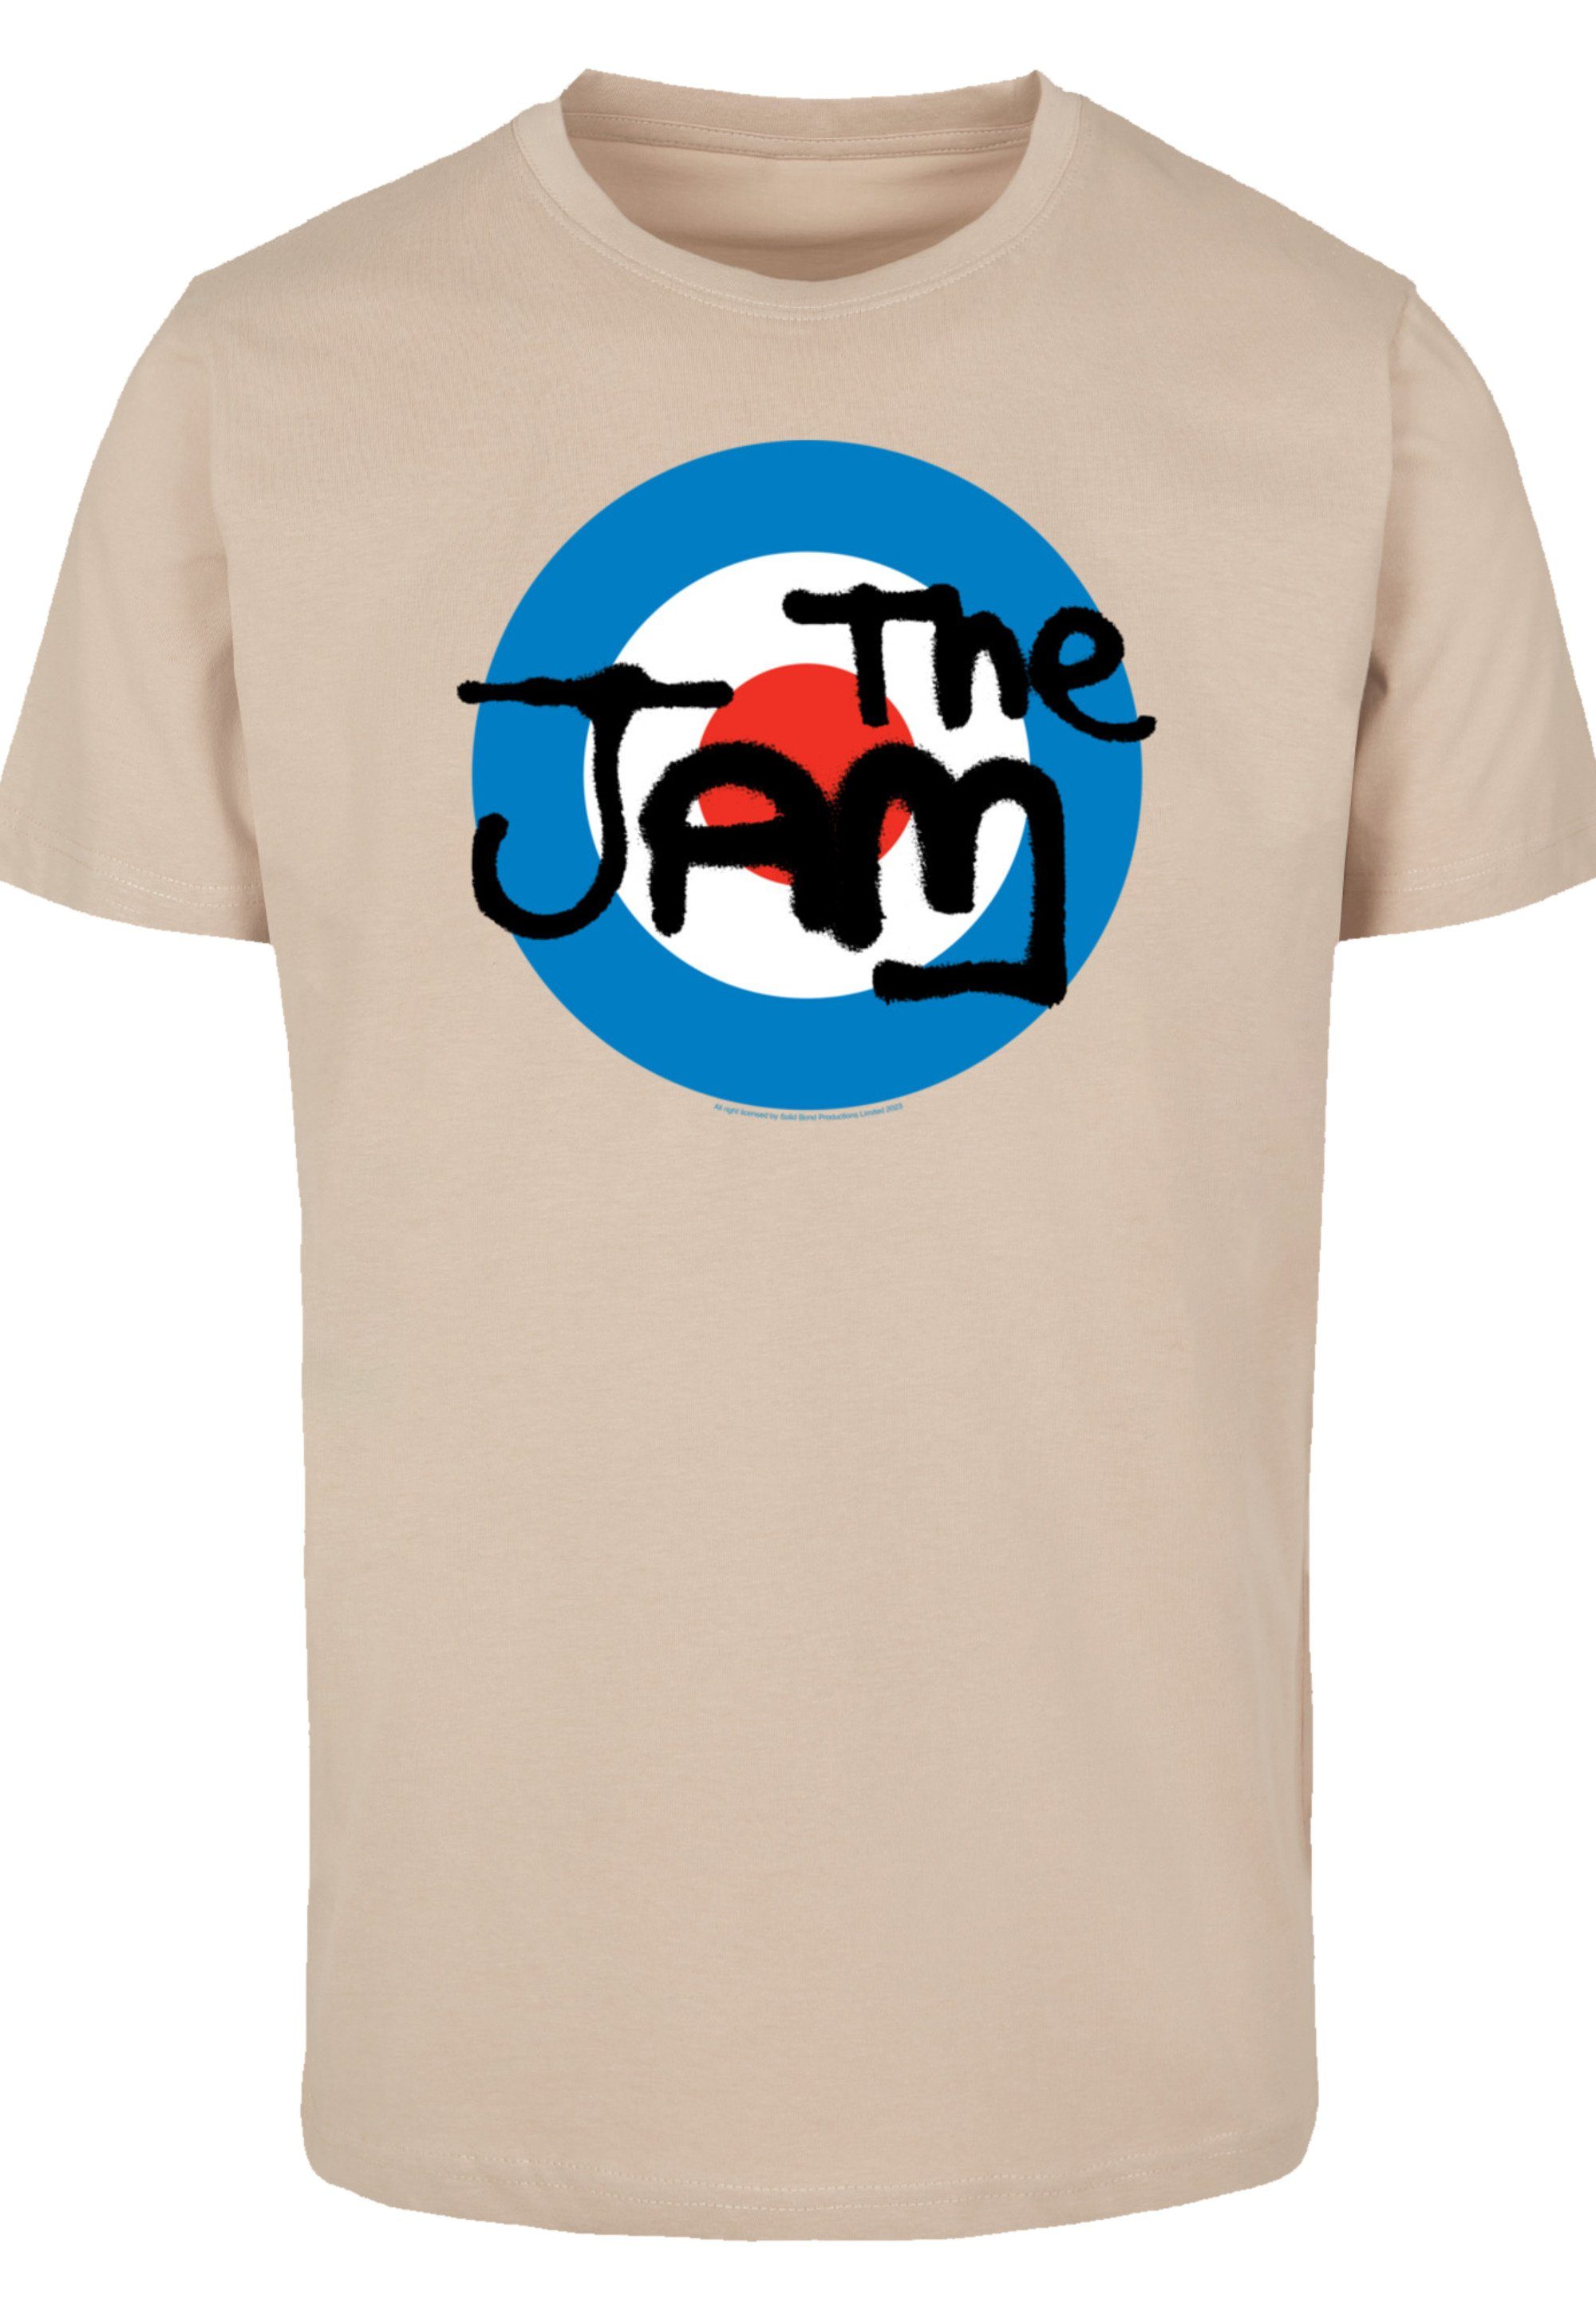 Rippbündchen am Jam Premium Qualität, T-Shirt Doppelnähte Saum Band Classic am Hals The F4NT4STIC und Logo